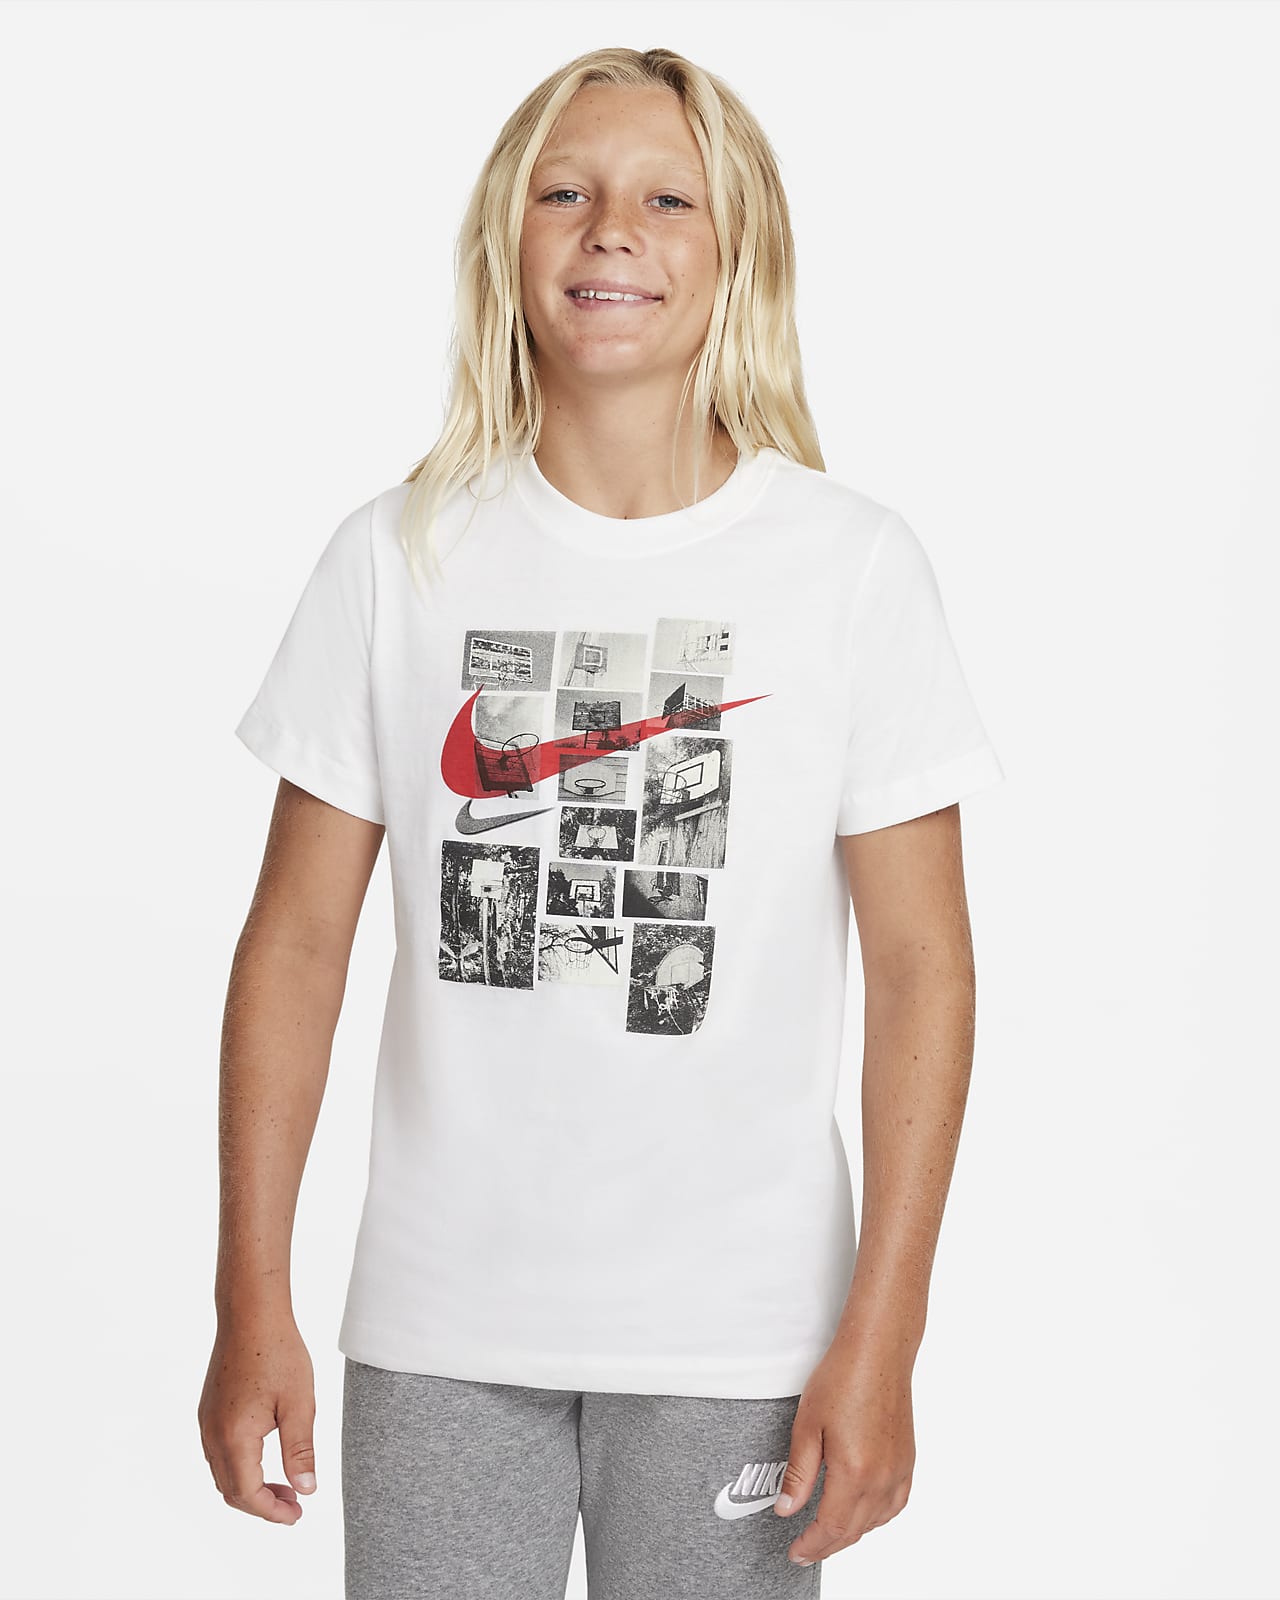 Tee-shirt Nike Sportswear pour Garçon plus âgé